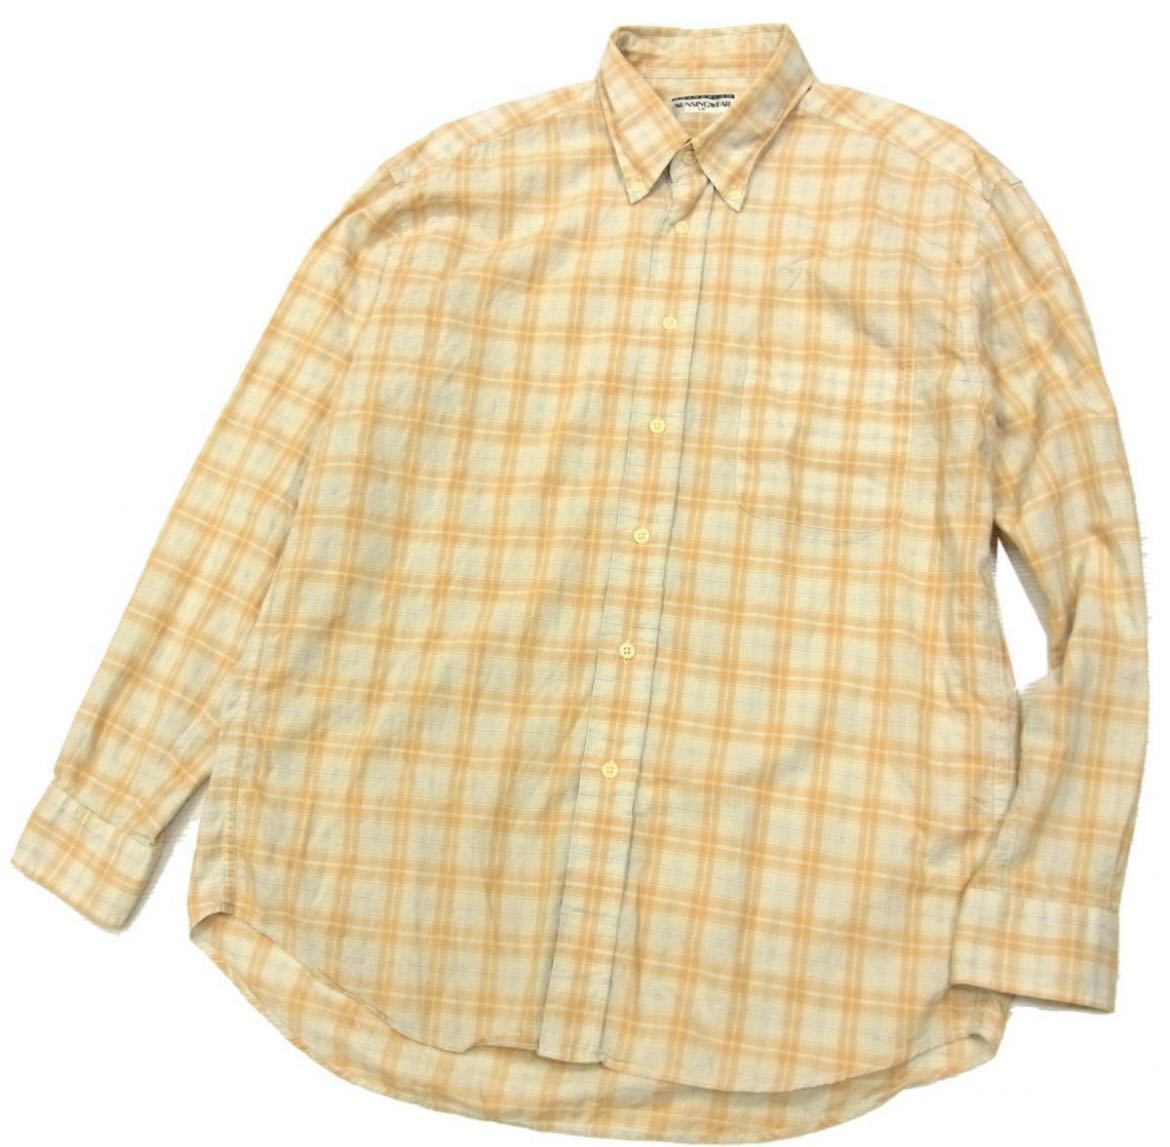  price 2 ten thousand jpy degree * Munsingwear wear long sleeve shirt men's LB (LL corresponding )